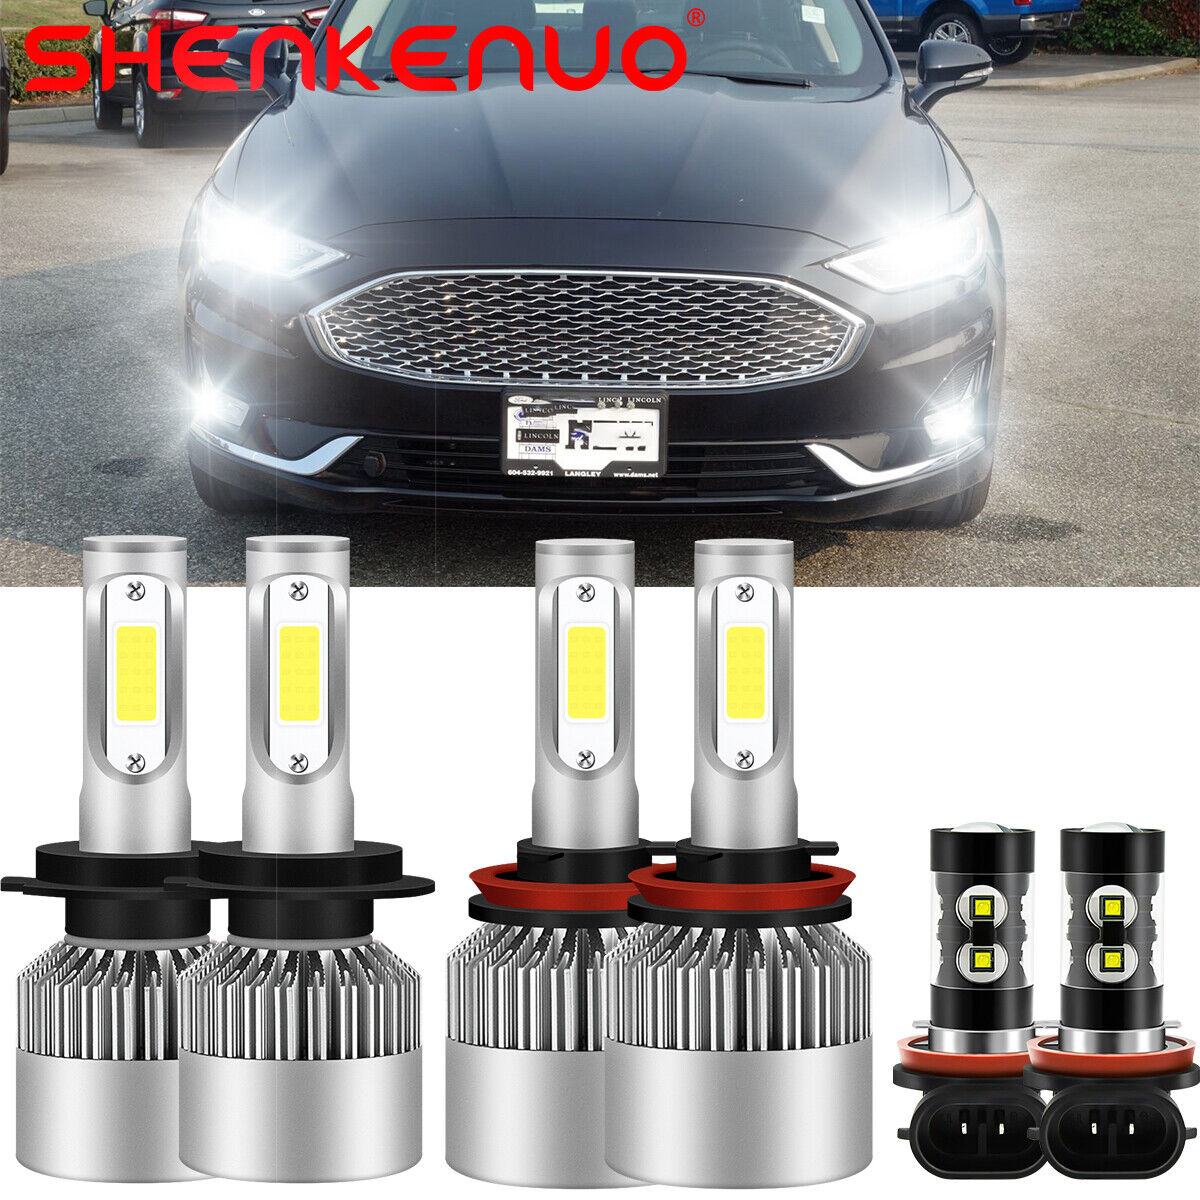 6X H7+H11+H11 Combo COB LED Headlight Bulbs Hi Low Fog For Ford Fusion 2006-2018